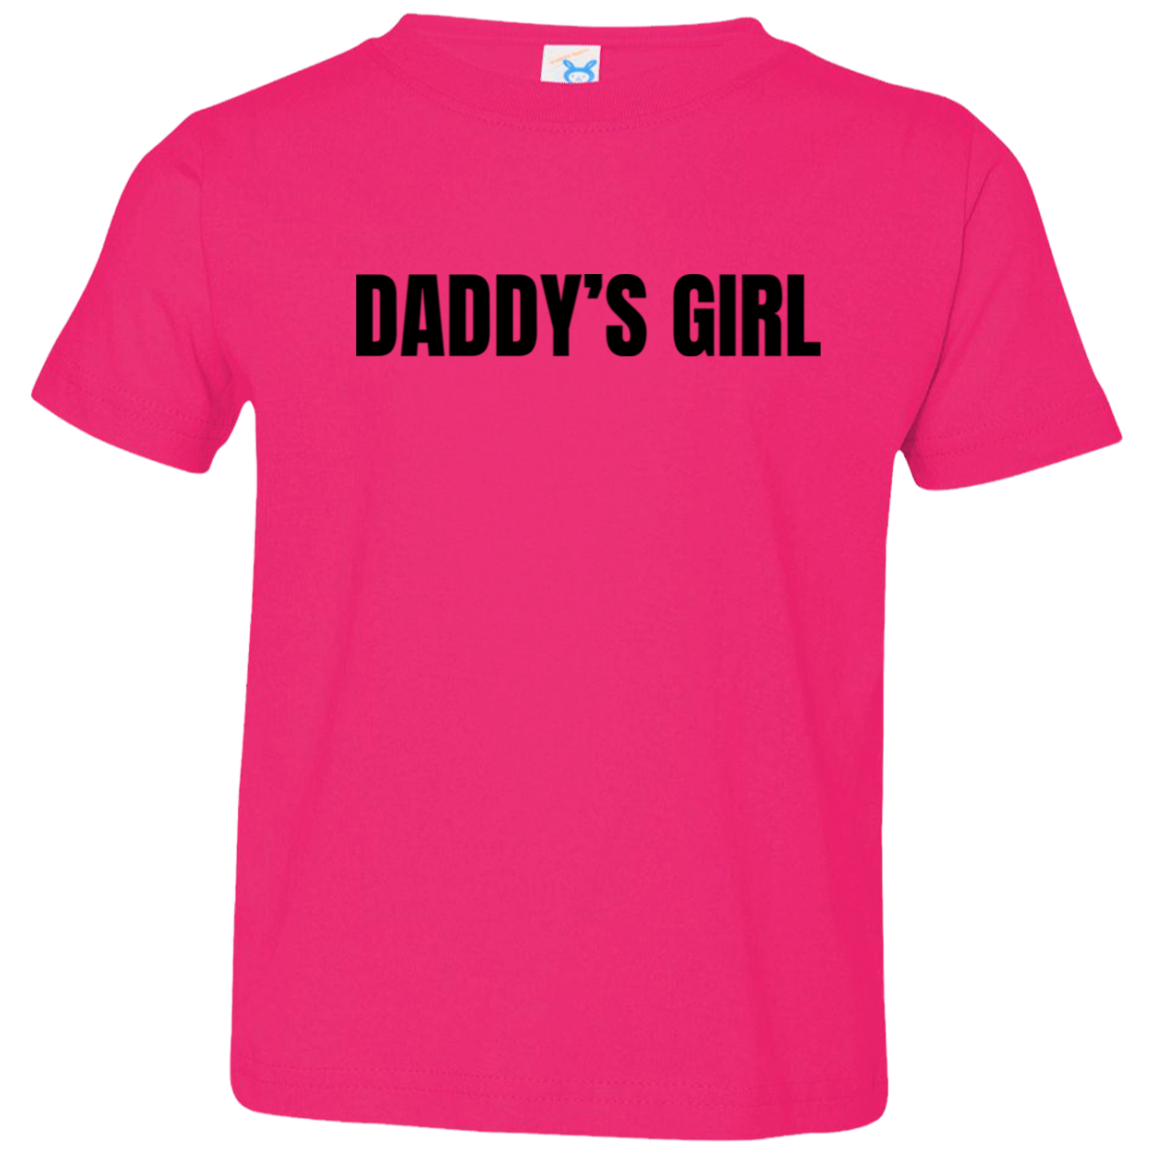 Daddy's Girl - Girls' Toddler Jersey T-Shirt